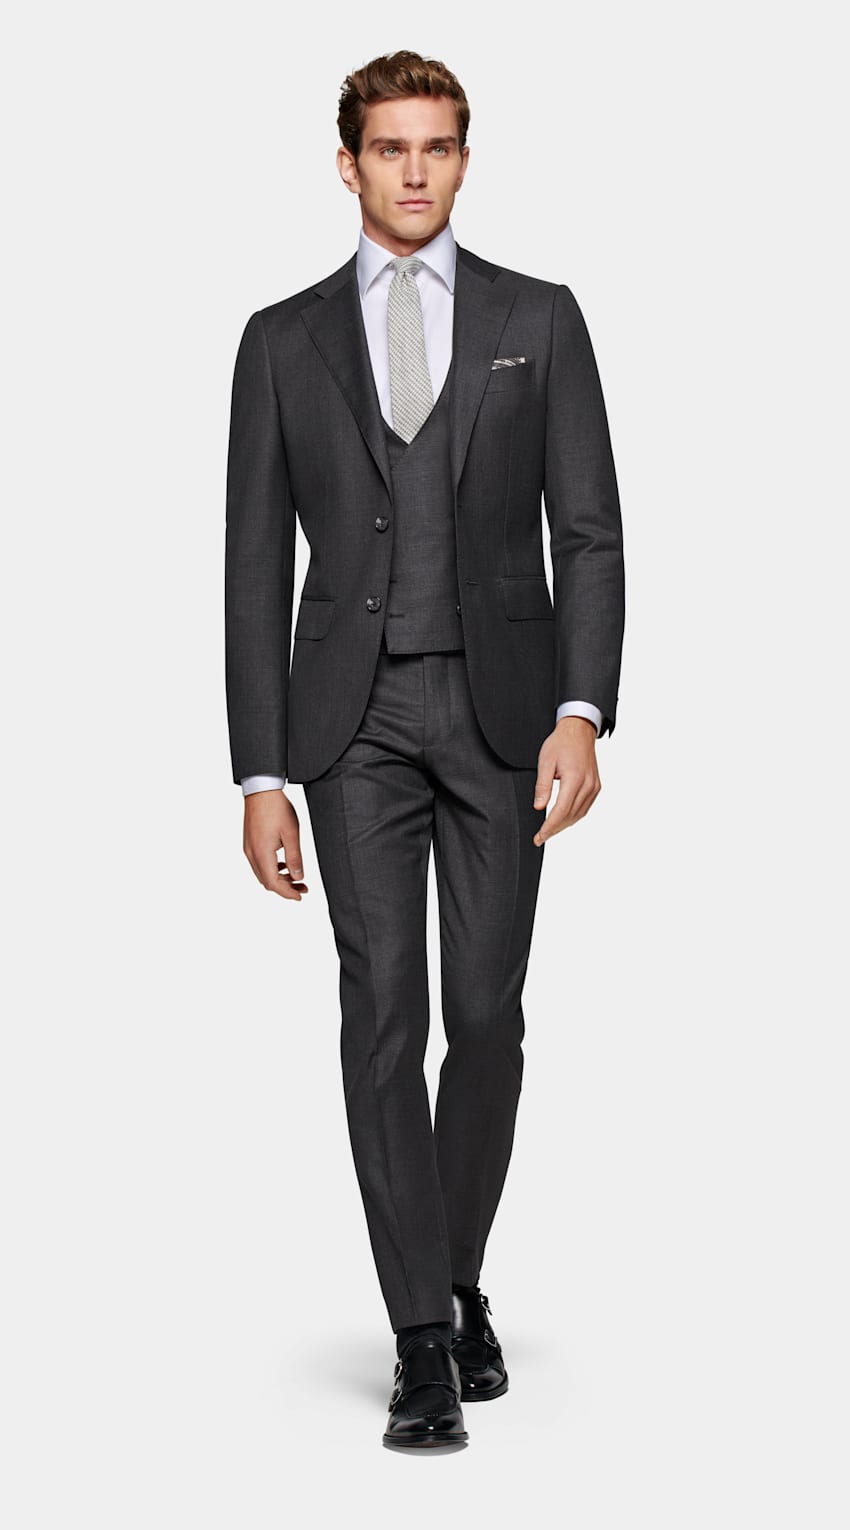 SUITSUPPLY Pure S110's Wool by Vitale Barberis Canonico, Italy Dark Grey Lazio Suit